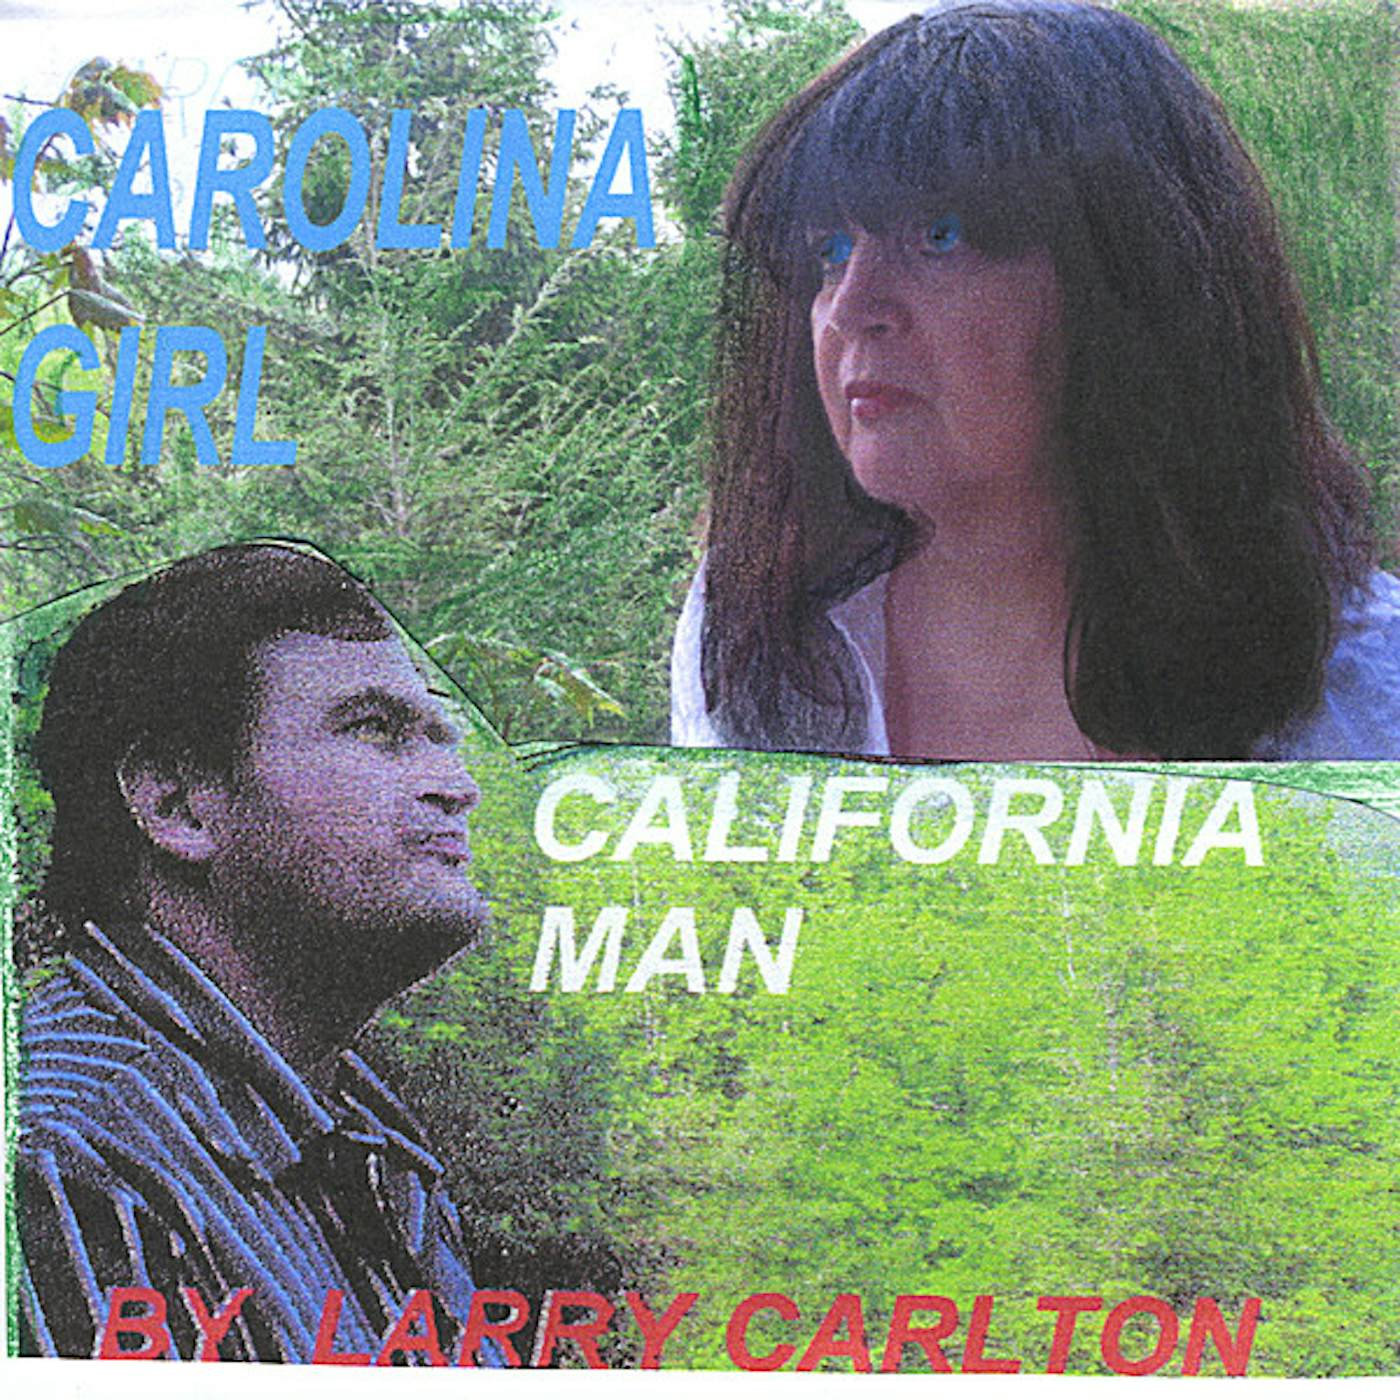 Larry Carlton CAROLINA GIRL CALIFORNIA MAN CD